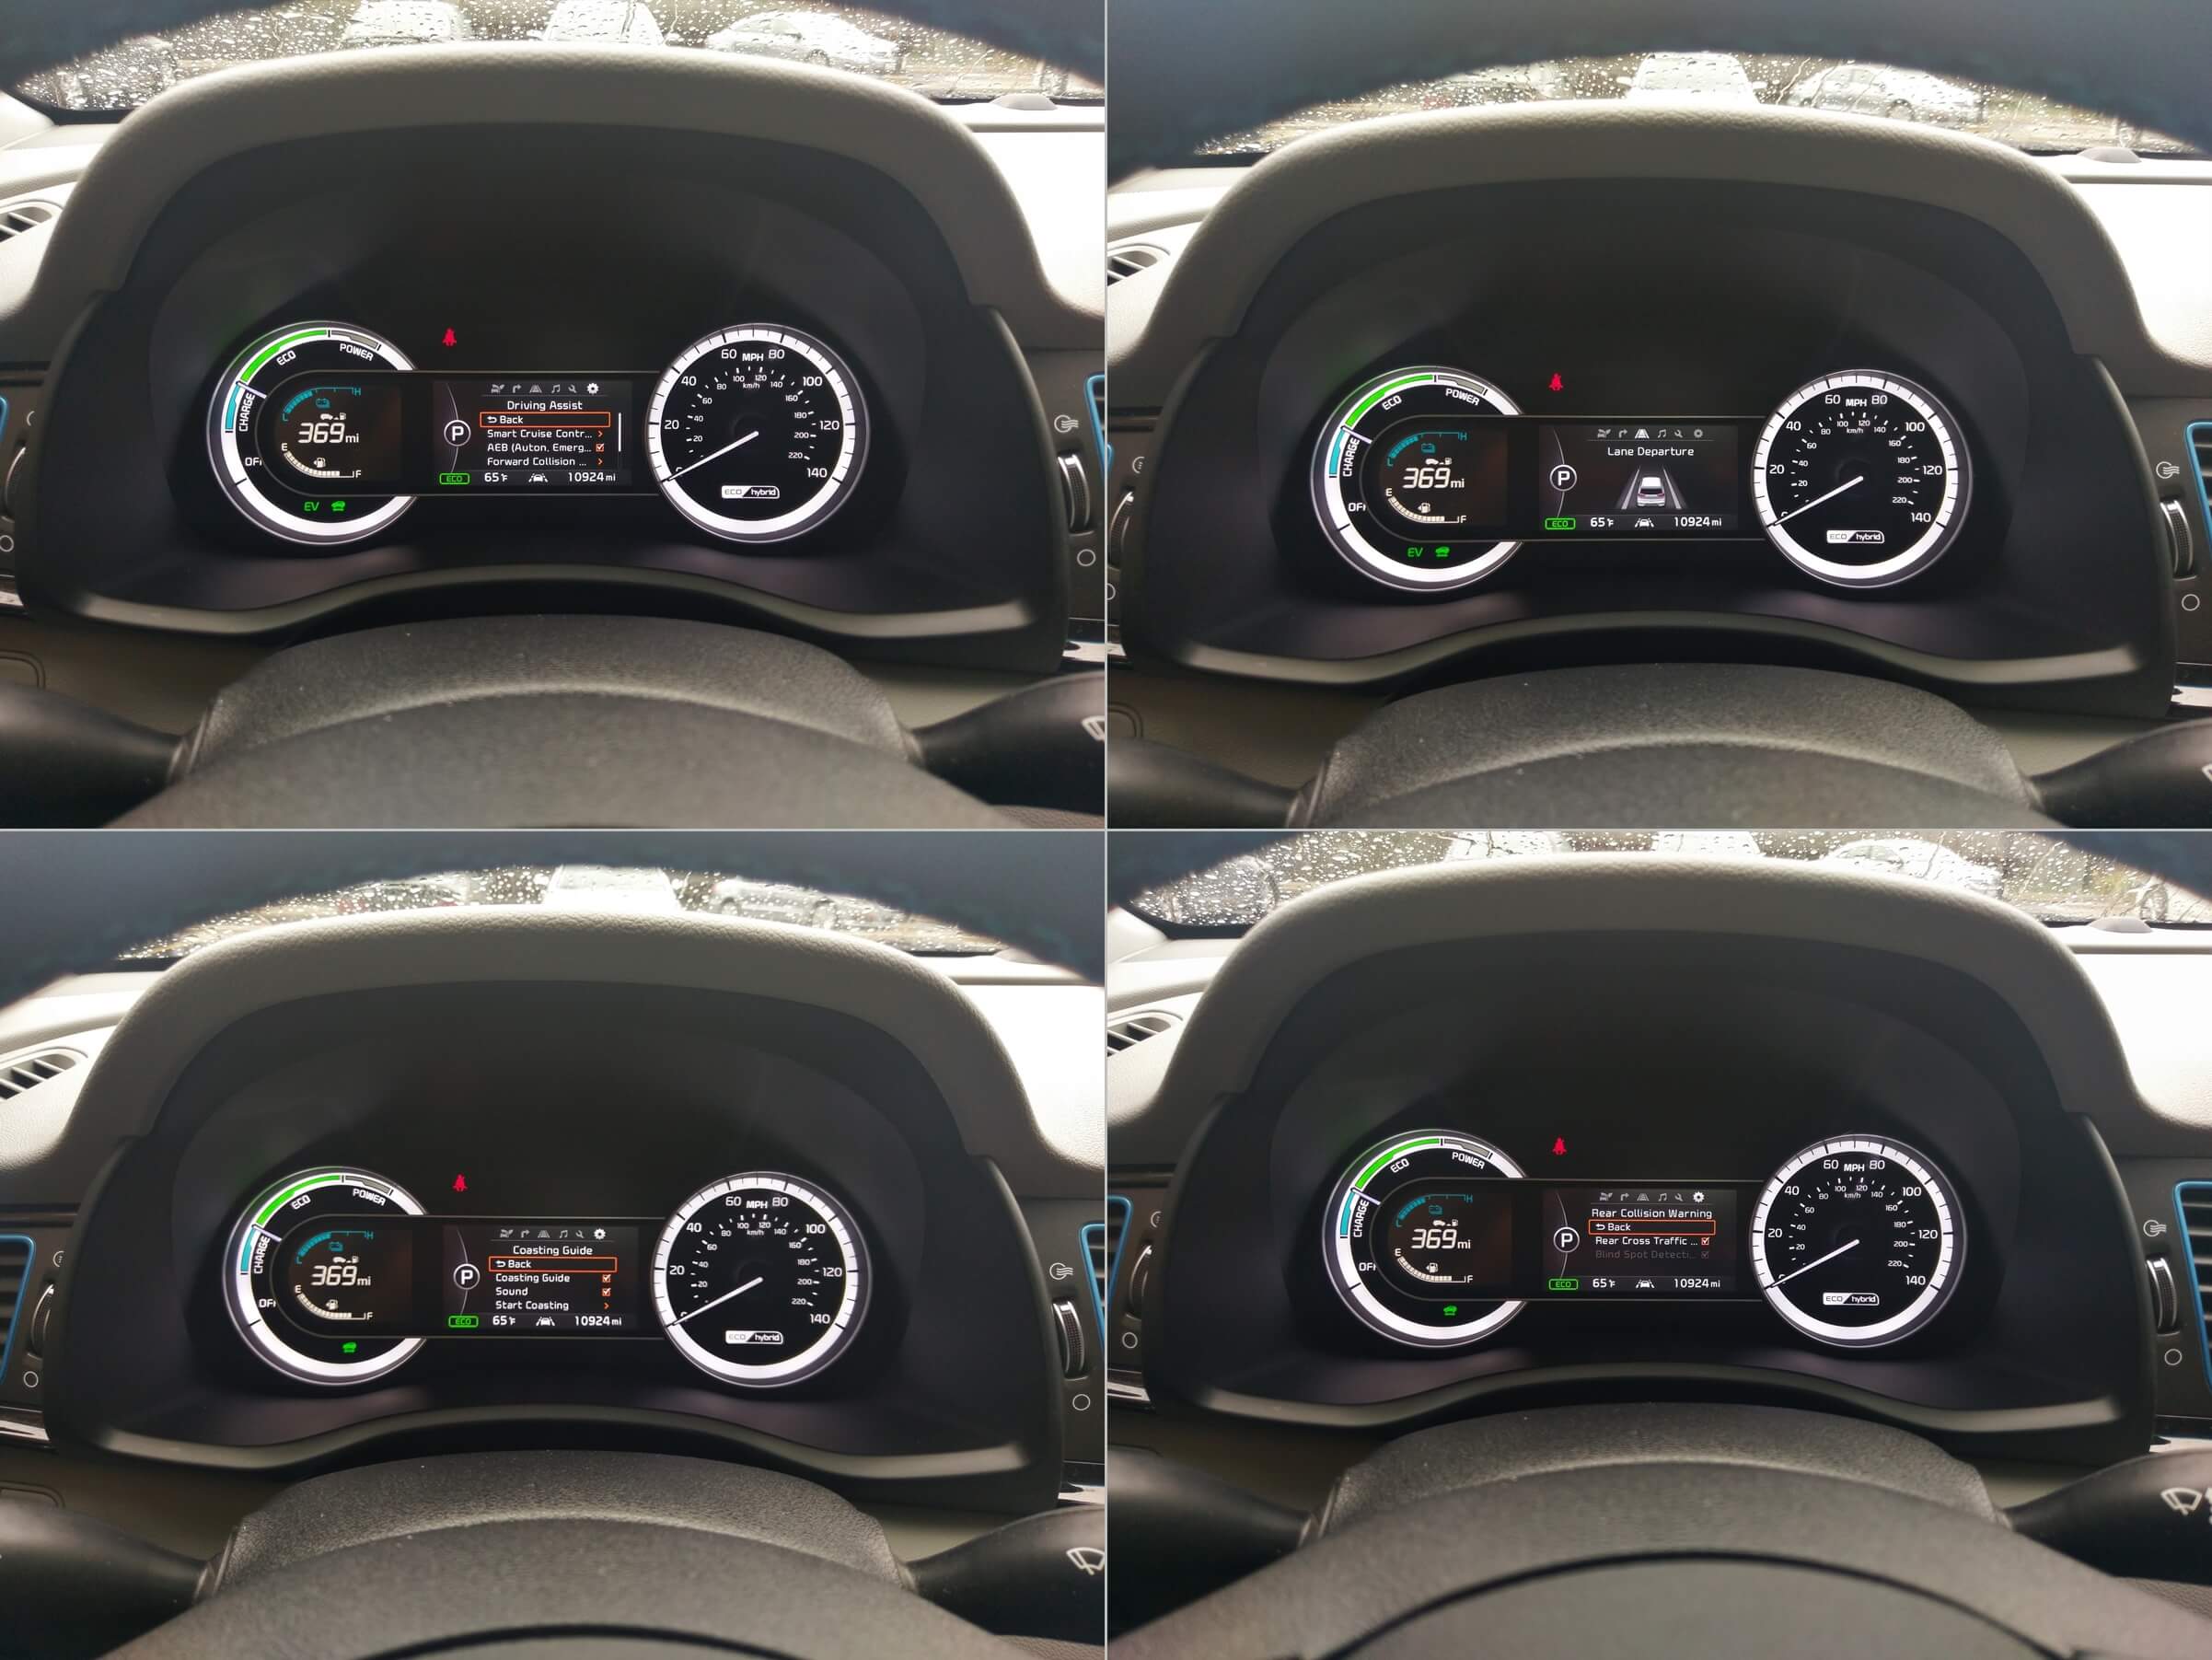 2017 Kia Niro Hybrid Touring: Adaptive Tech. Pkg. ($1900 opt.) includes Driver assist functions: include Rear cross traffic alert, Blind spot & Lane departure warning, Collision avoidance e-braking